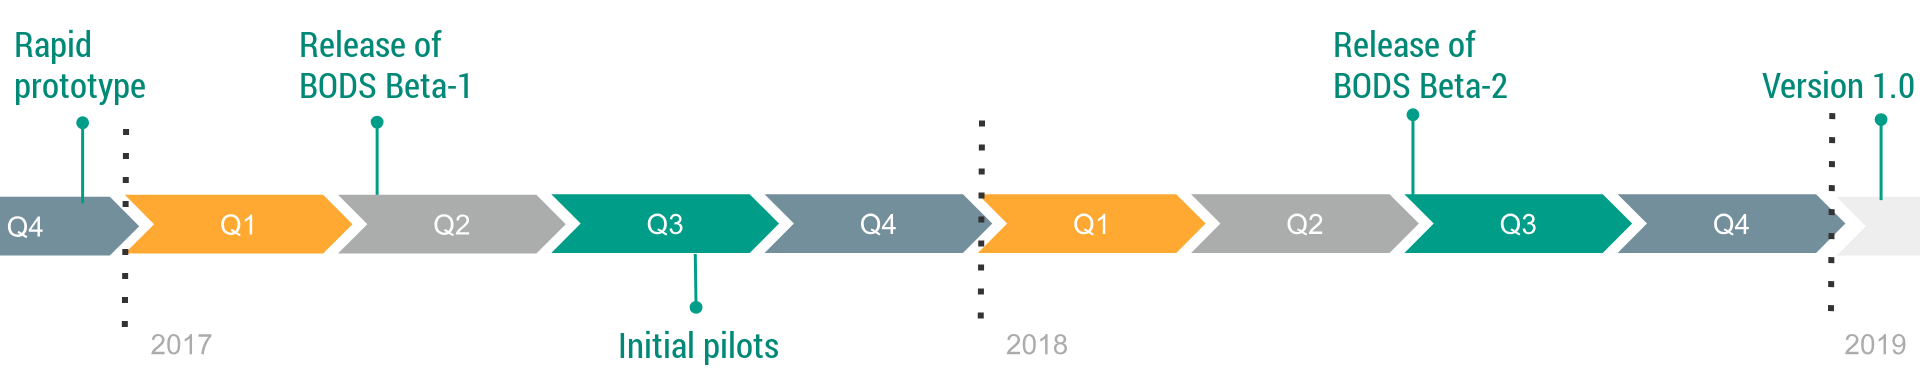 Timeline of standard development. End of 2016: rapid prototype. 2017, Q2: release of BODS Beta-1. 2017, Q3: initital pilots. 2018, Q3: release of BODS Beta-2. 2019: release of BODS v1.0.